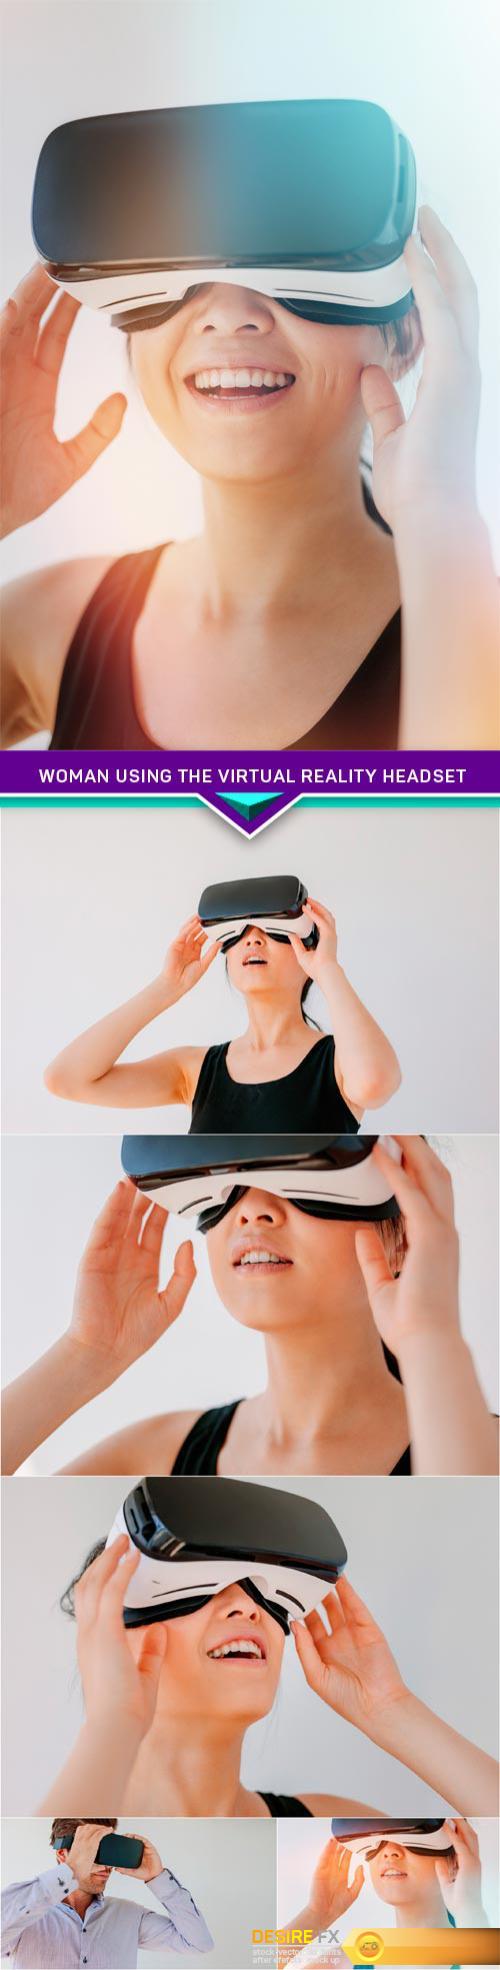 Smiling woman using the virtual reality headset 6X JPEG